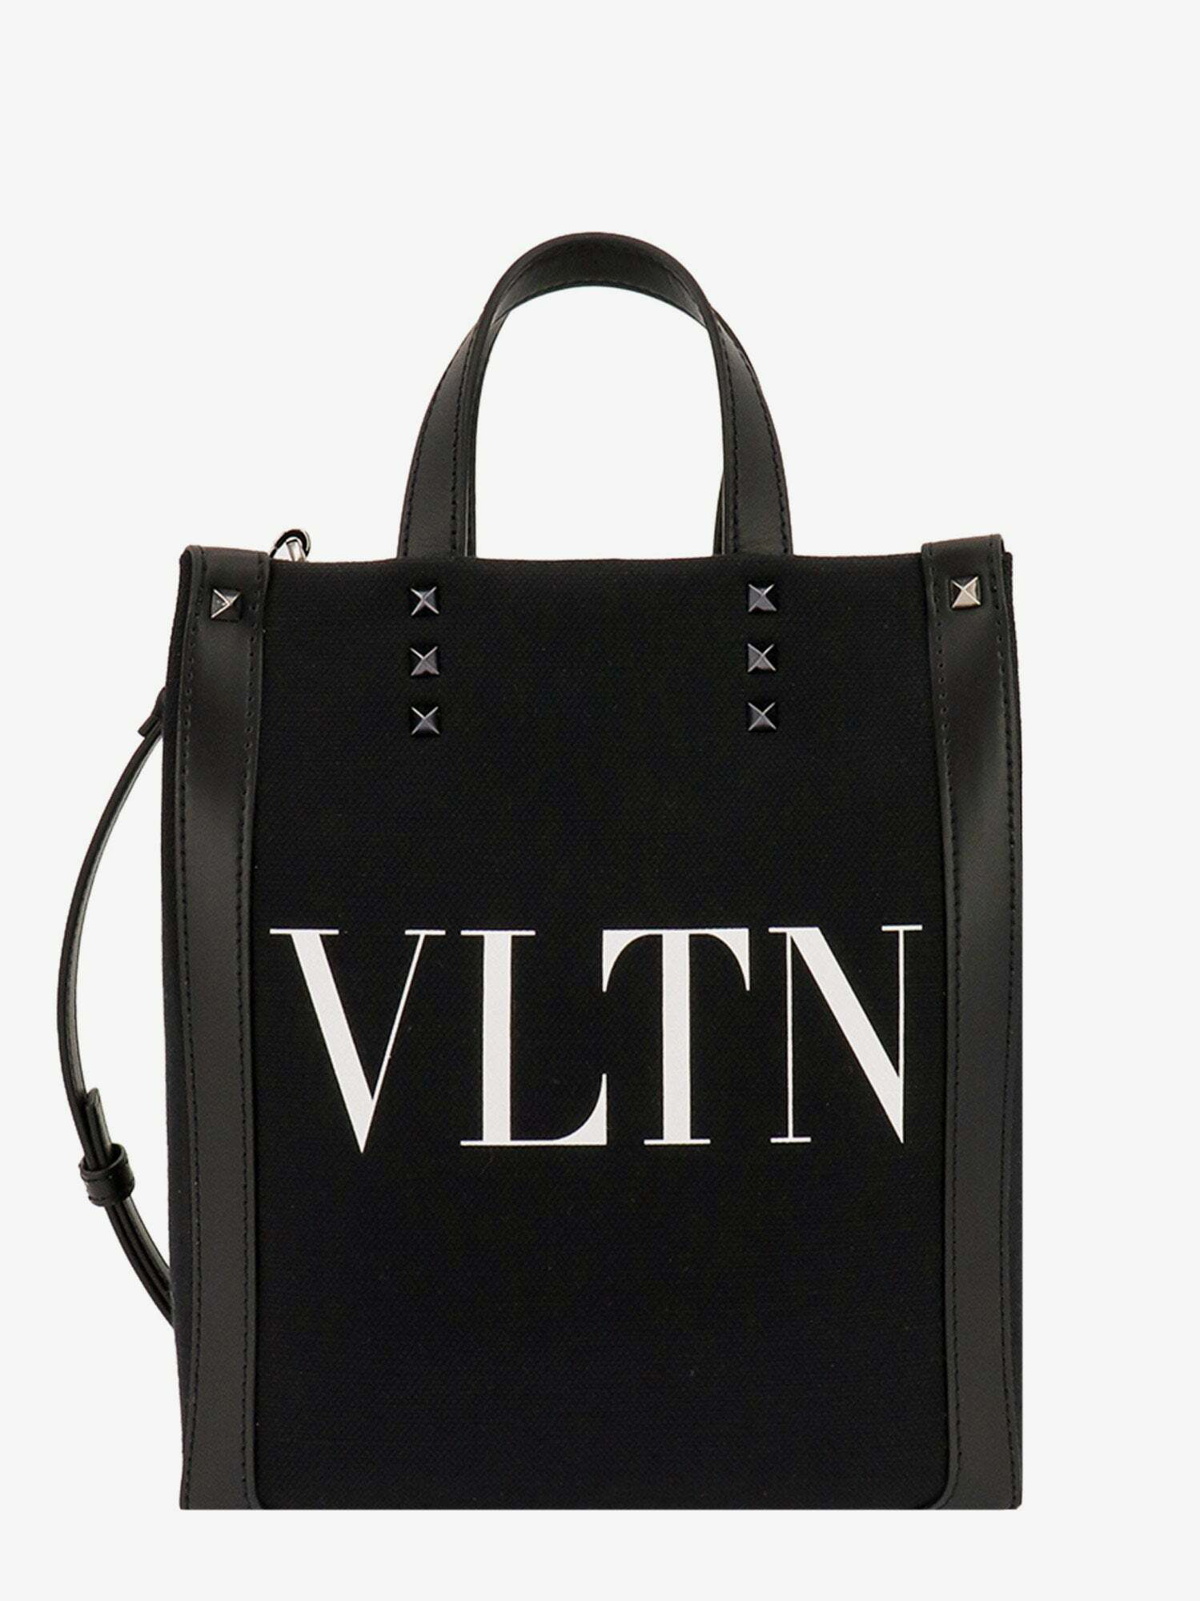 Vltn Leather Tote Bag for Man in Black/white